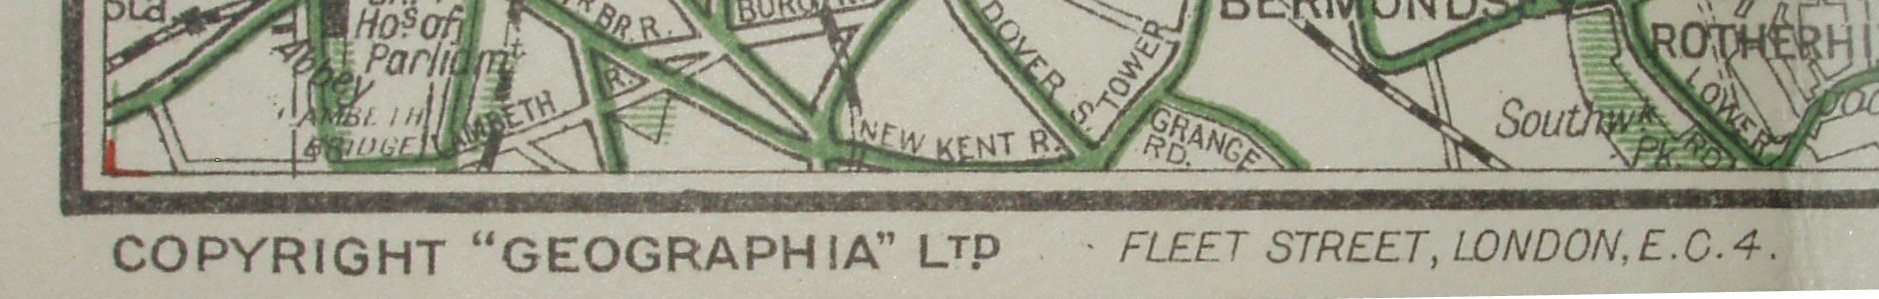 Geographia Ramblers Map, 1942 first address